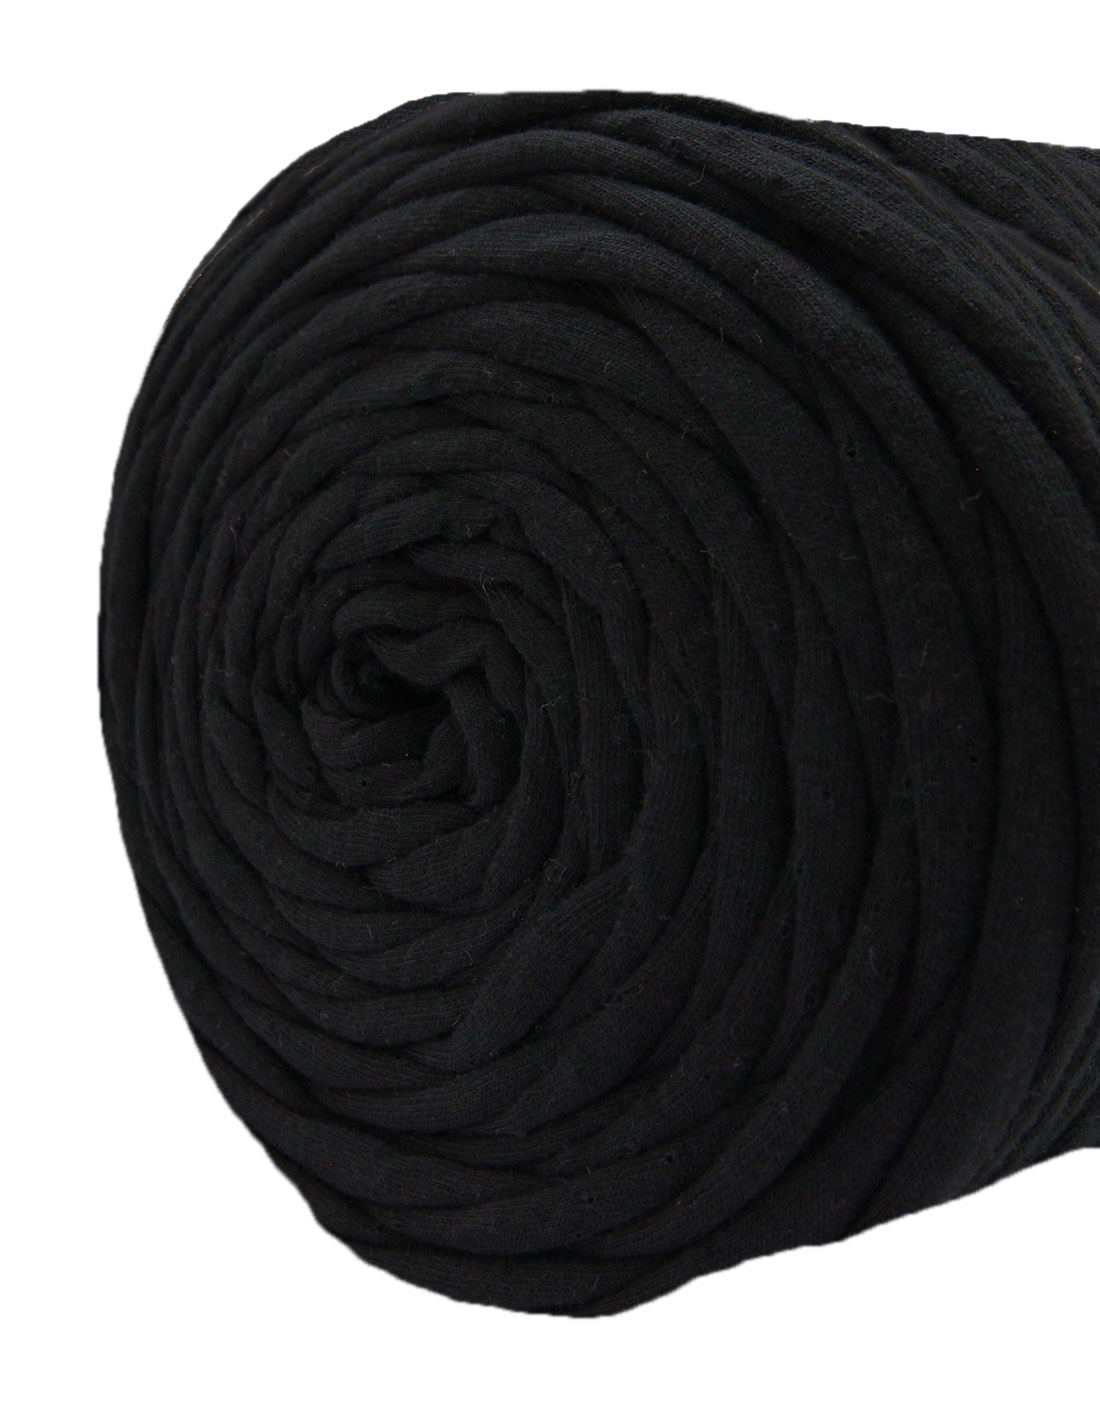 Black t-shirt yarn by Hoooked Zpagetti (100-120m)